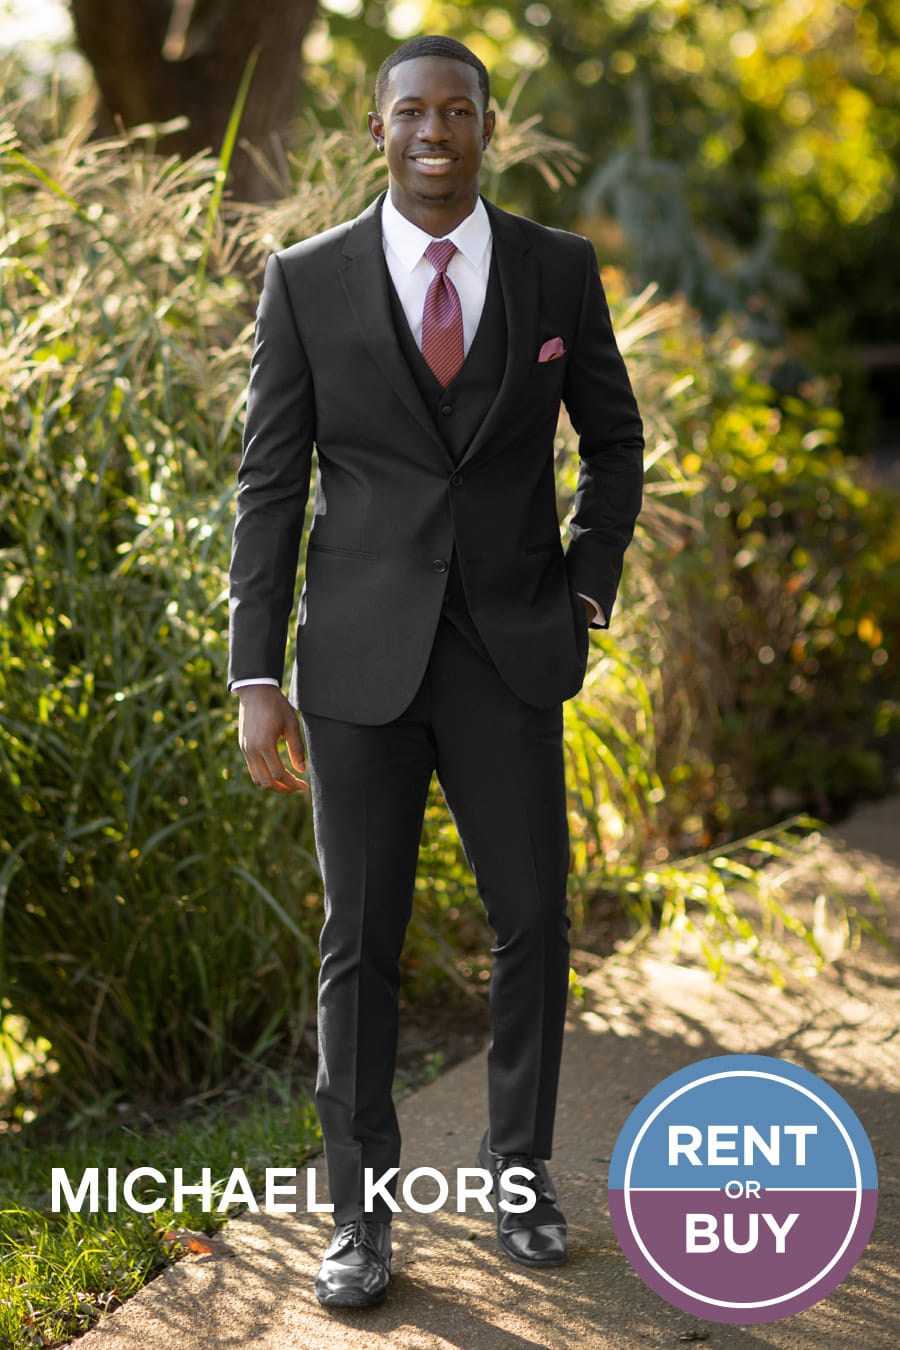 Michael Kors Black Performance Wedding Suit Rent or Buy for your wedding